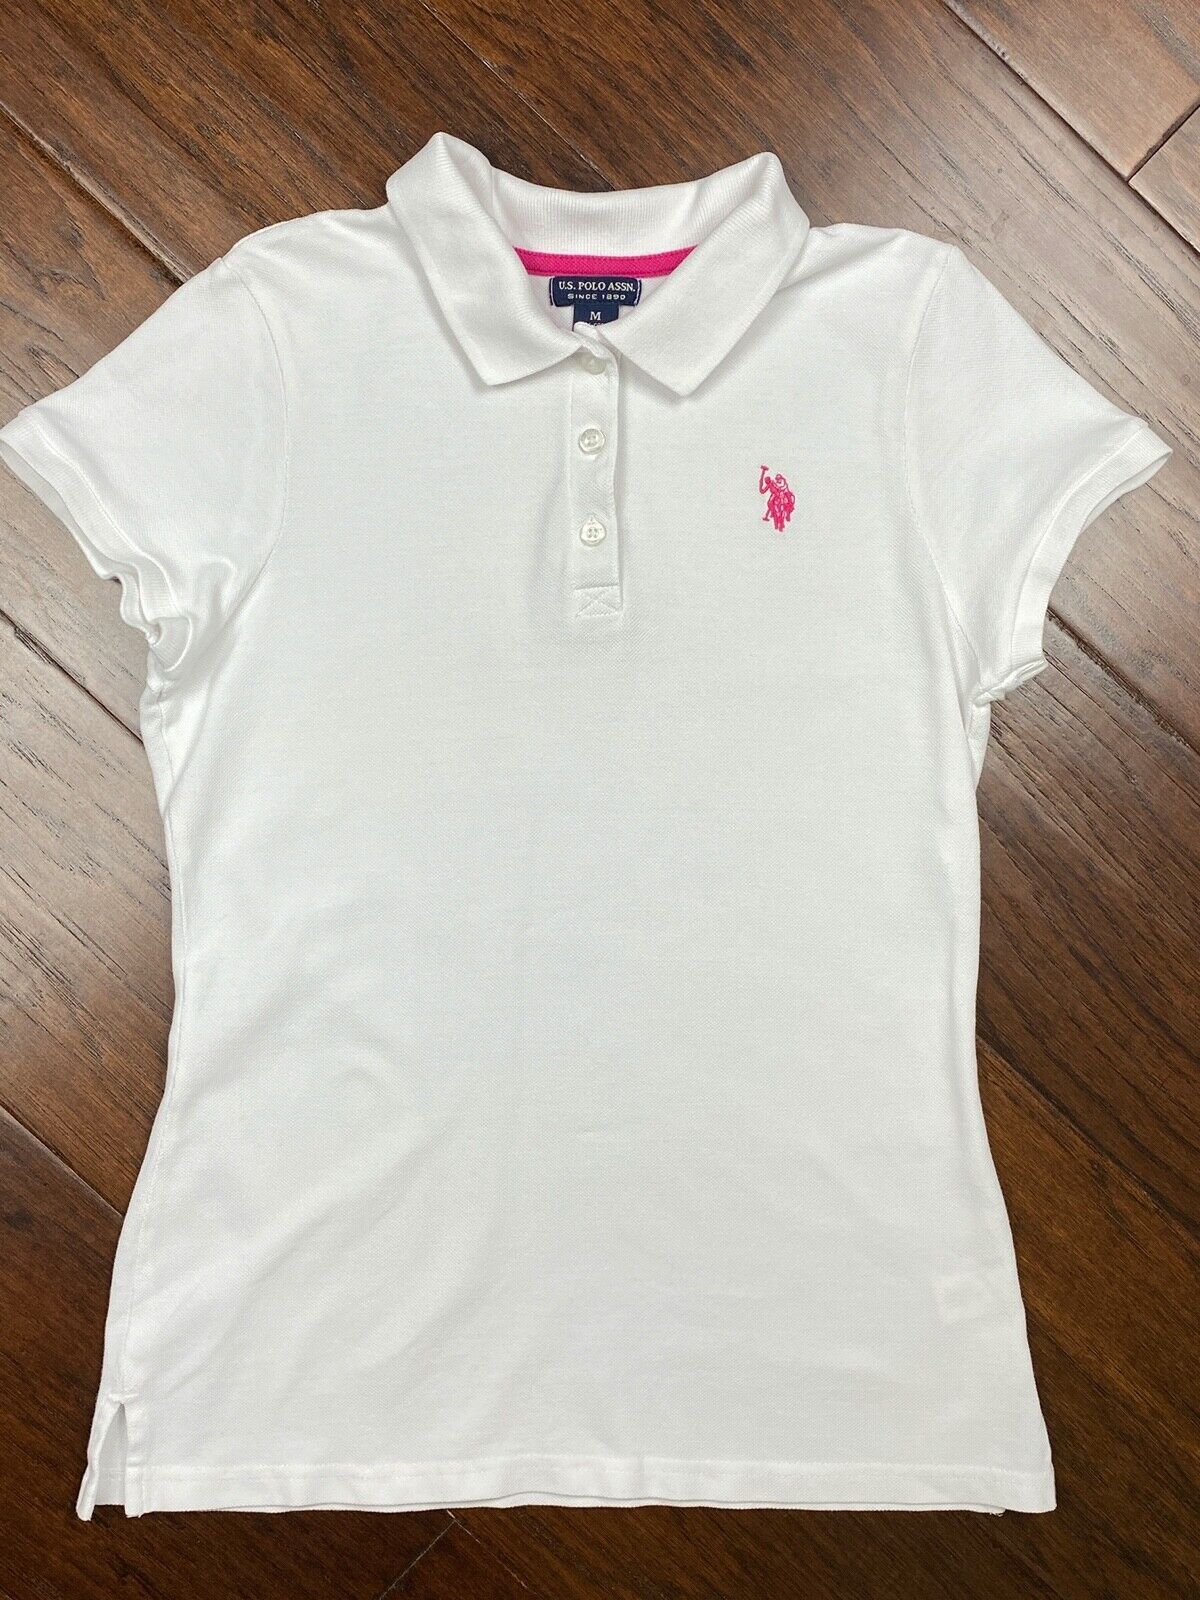 U.S.POLO ASSN. Girls White Pink Short Sleeve Polo Shirt Size M EUC